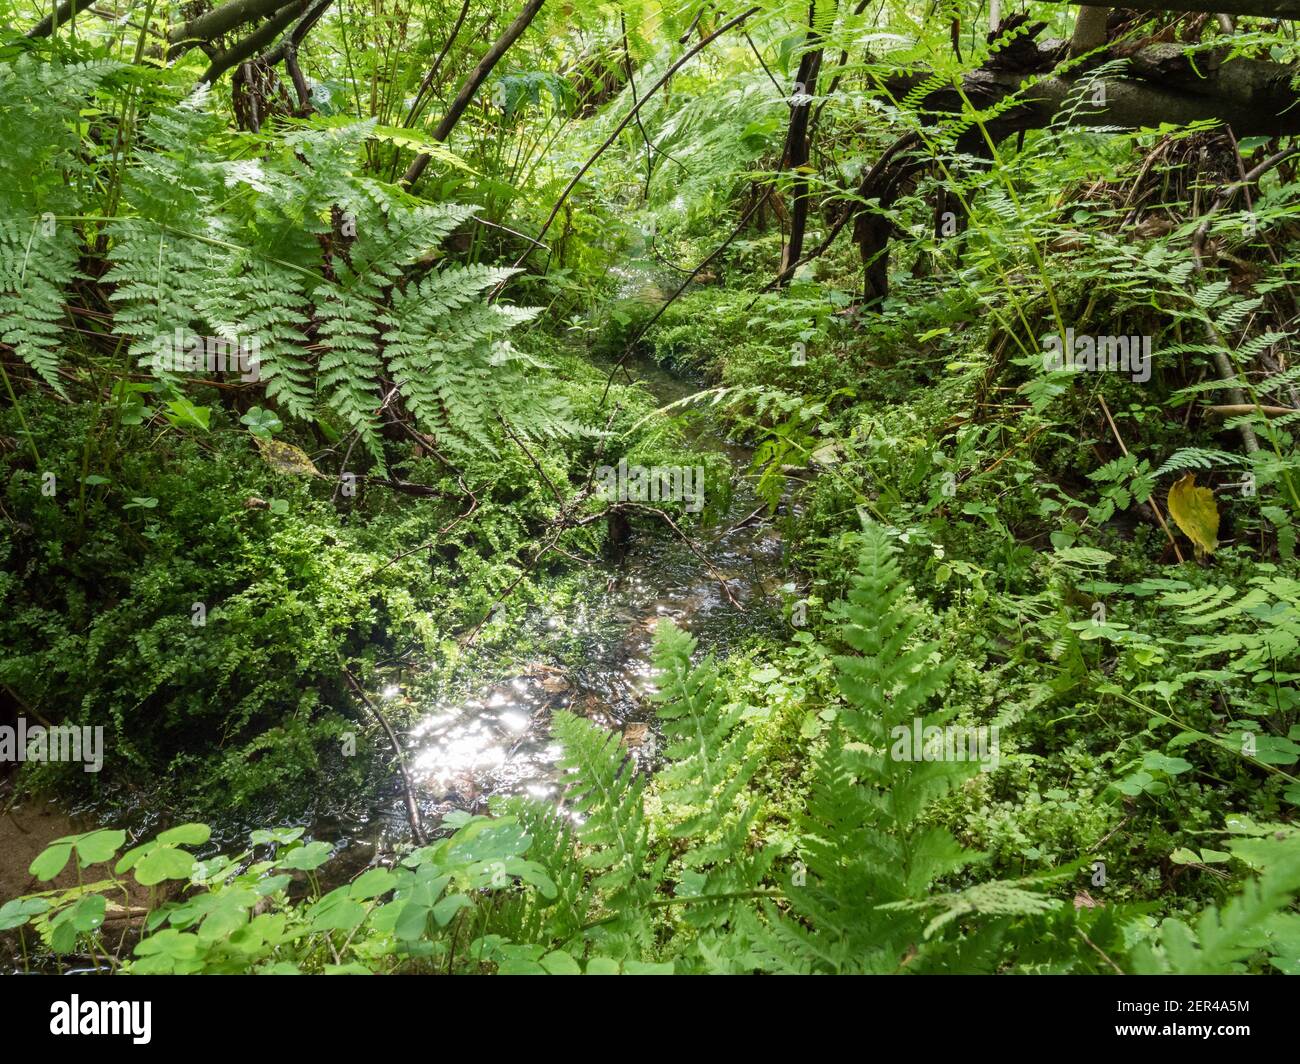 Spring brook running trough lush vegetation Stock Photo